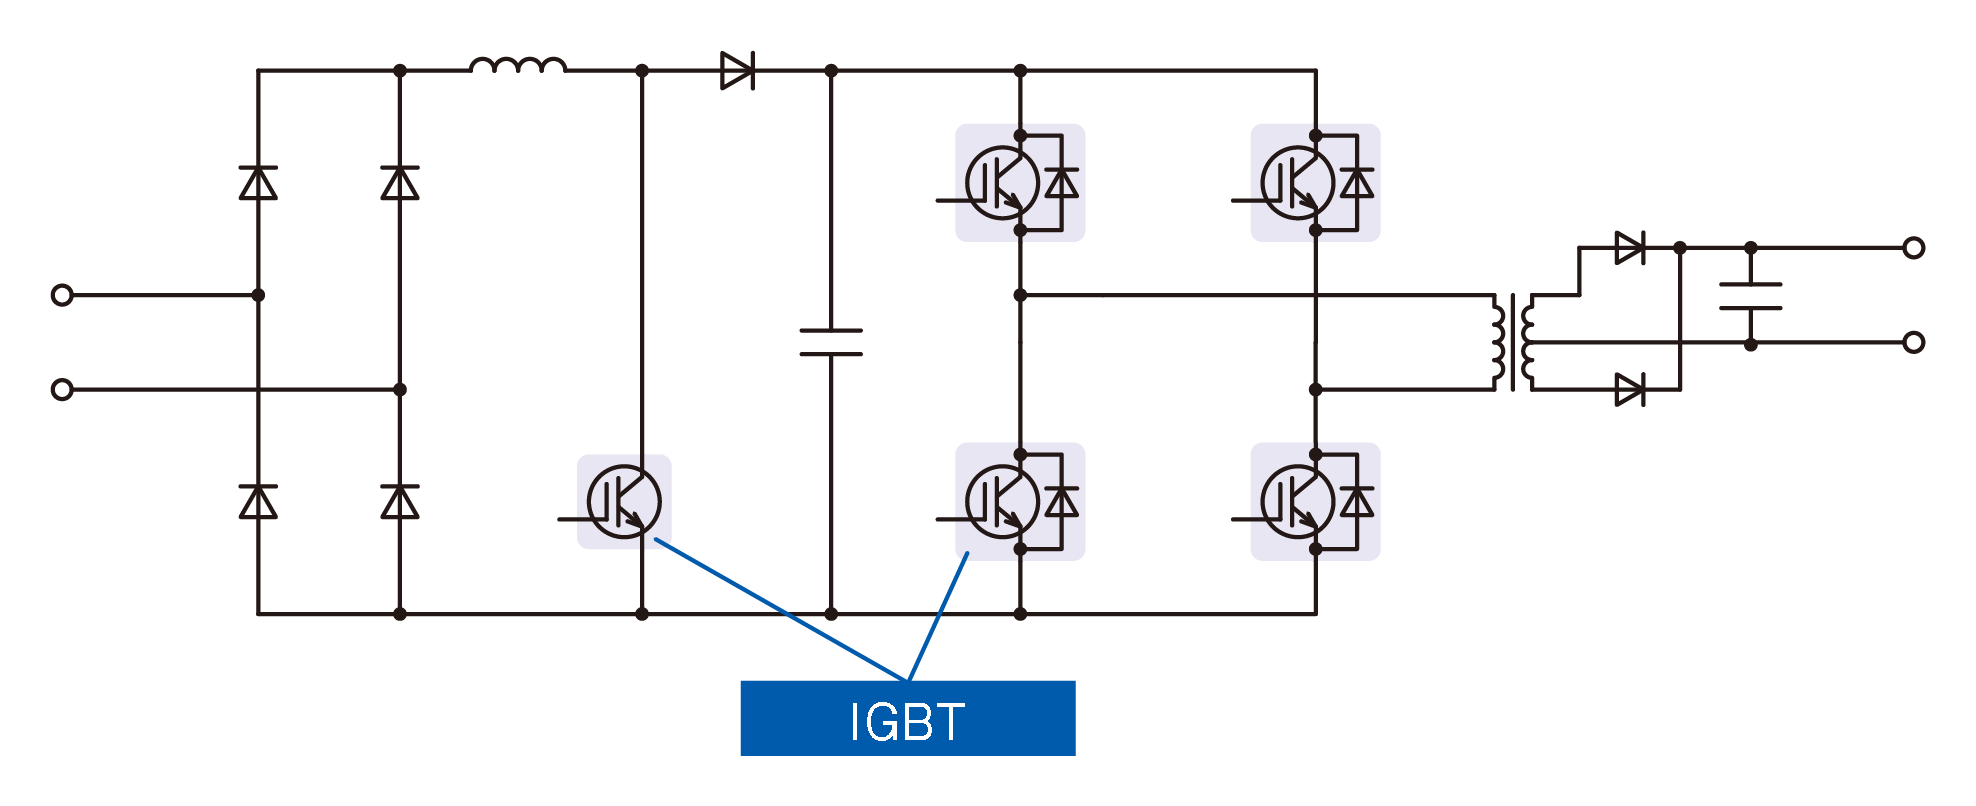 Figure 1. Hard switching type